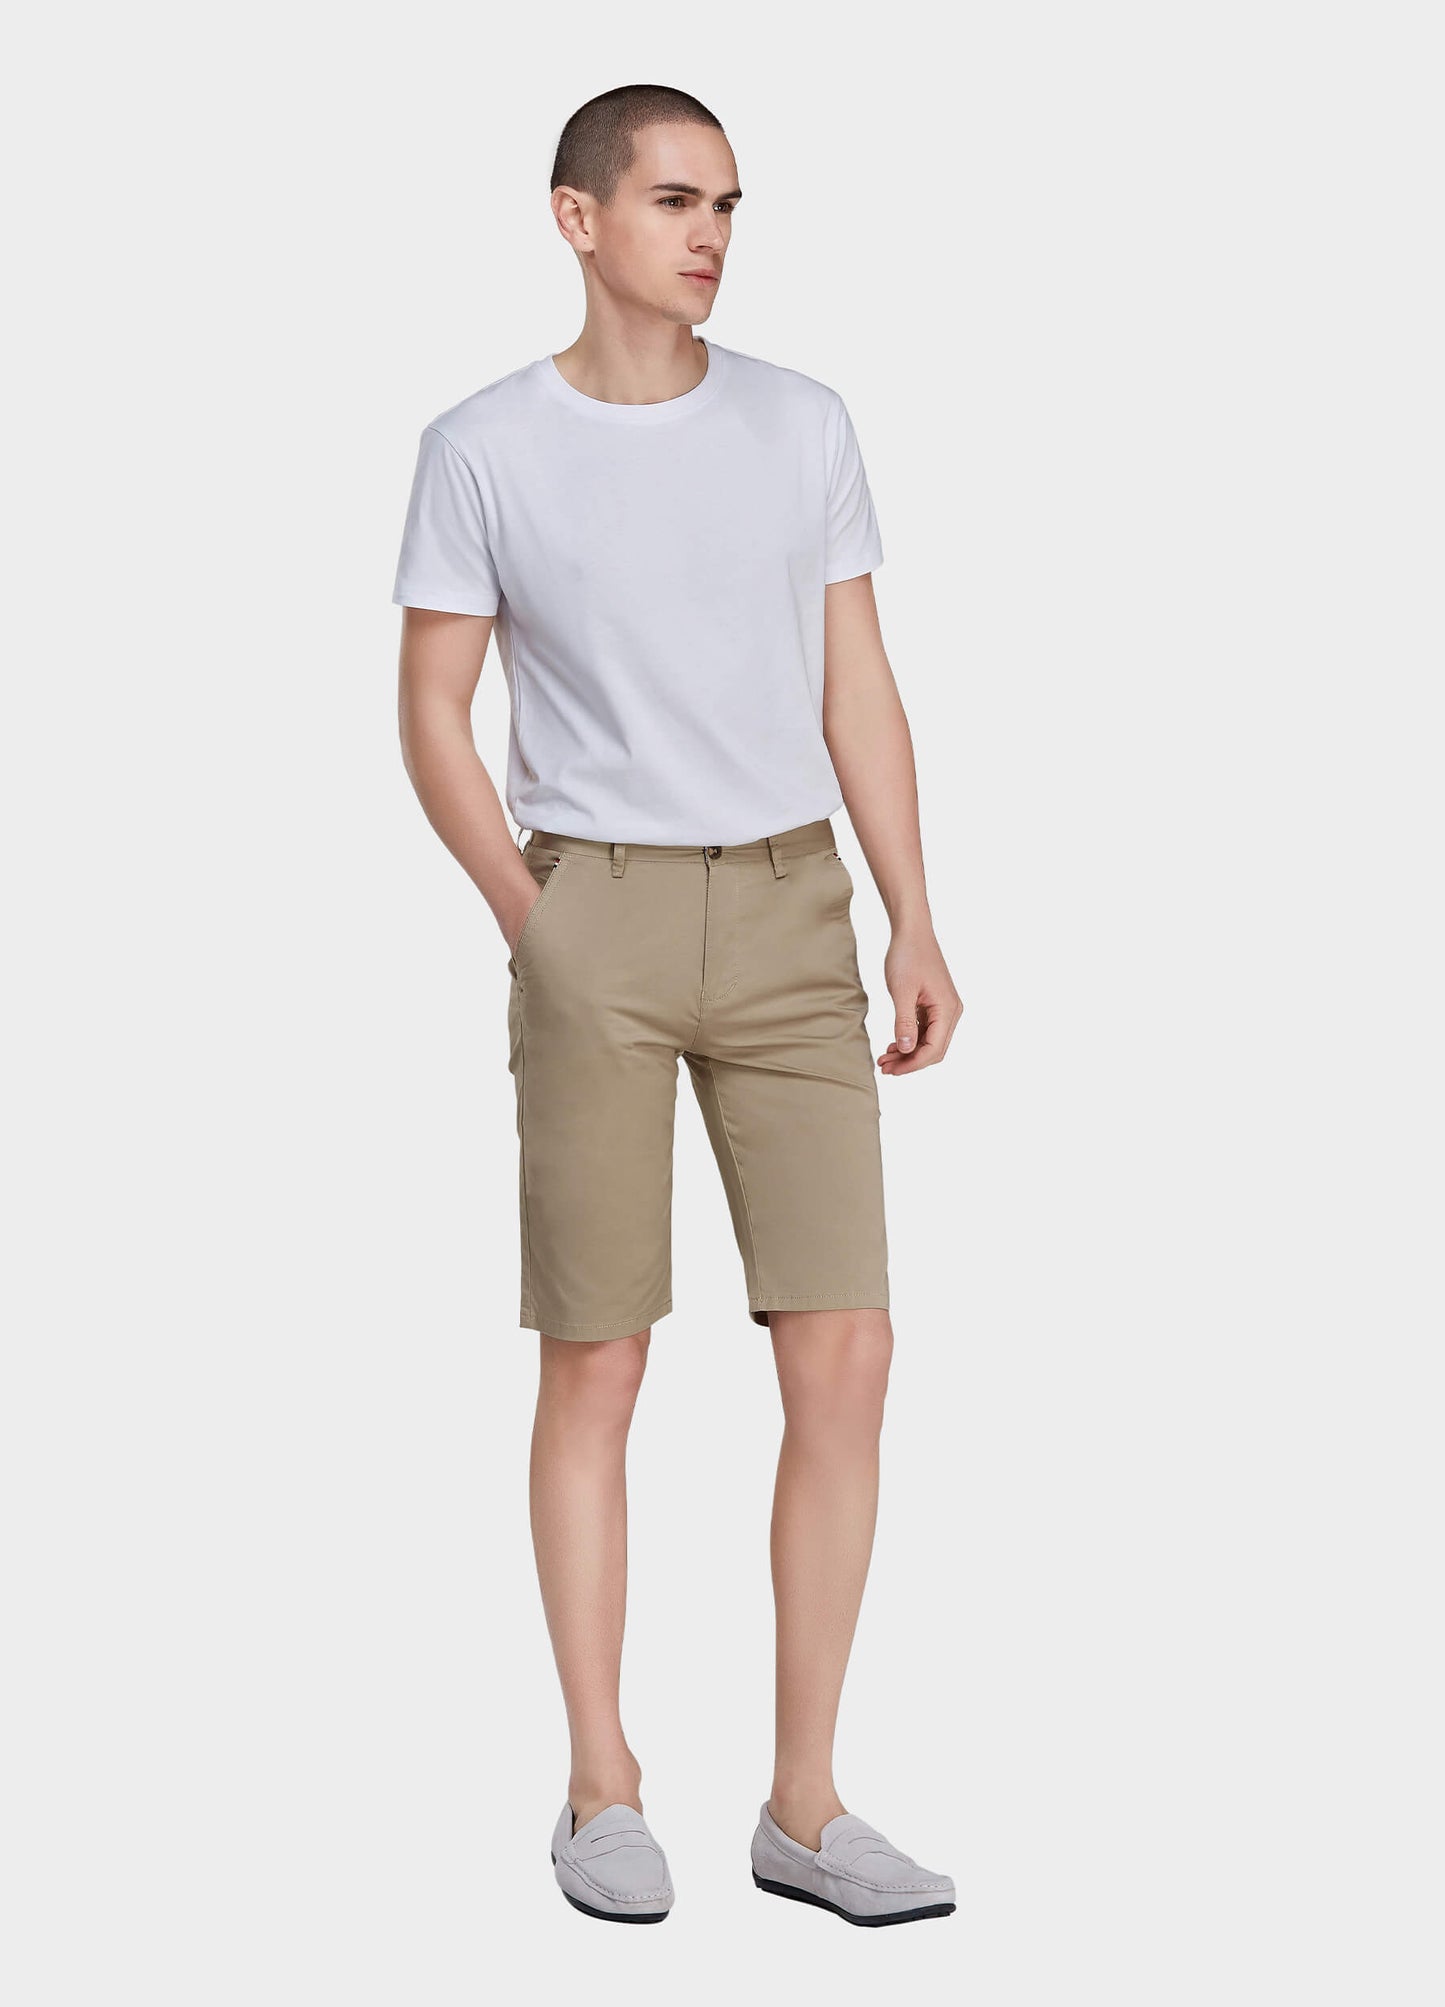 Men's Casual Button Closure Zipper Elasticity Solid Shorts with Slant Pocket-Khaki side view